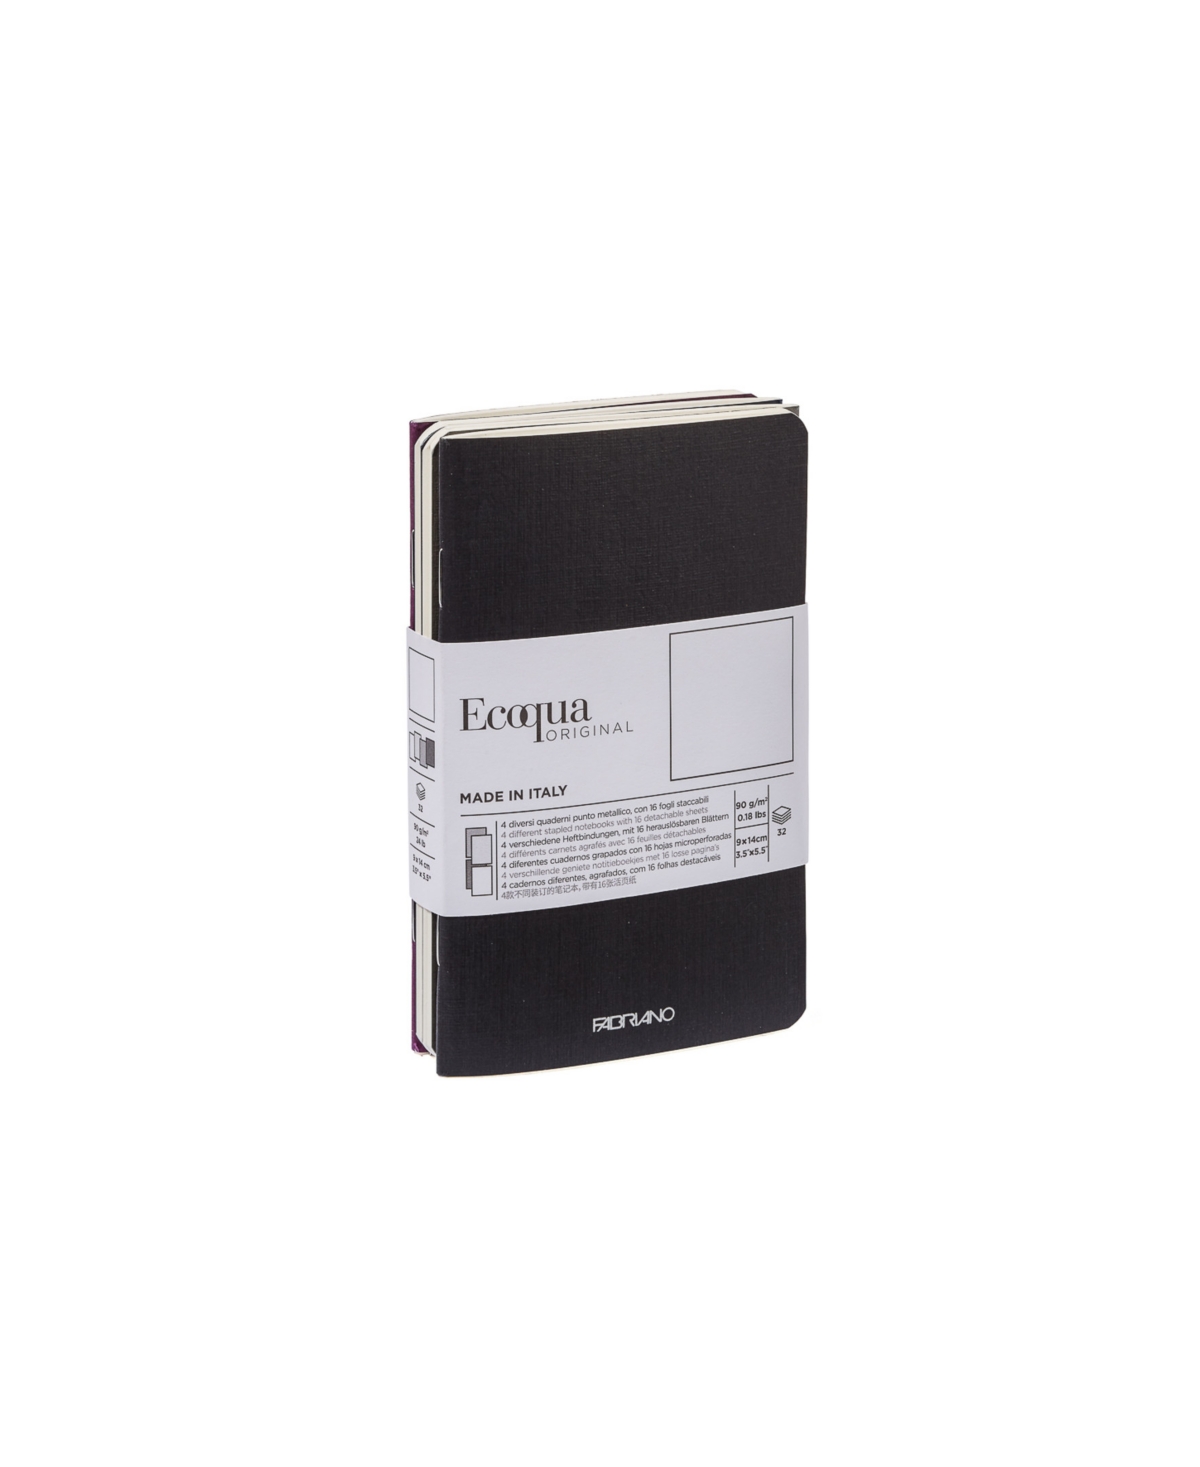 Winter Colors Ecoqua Pocket Sized Staple Bound Blank Notebook 4 Piece Pack - Multi